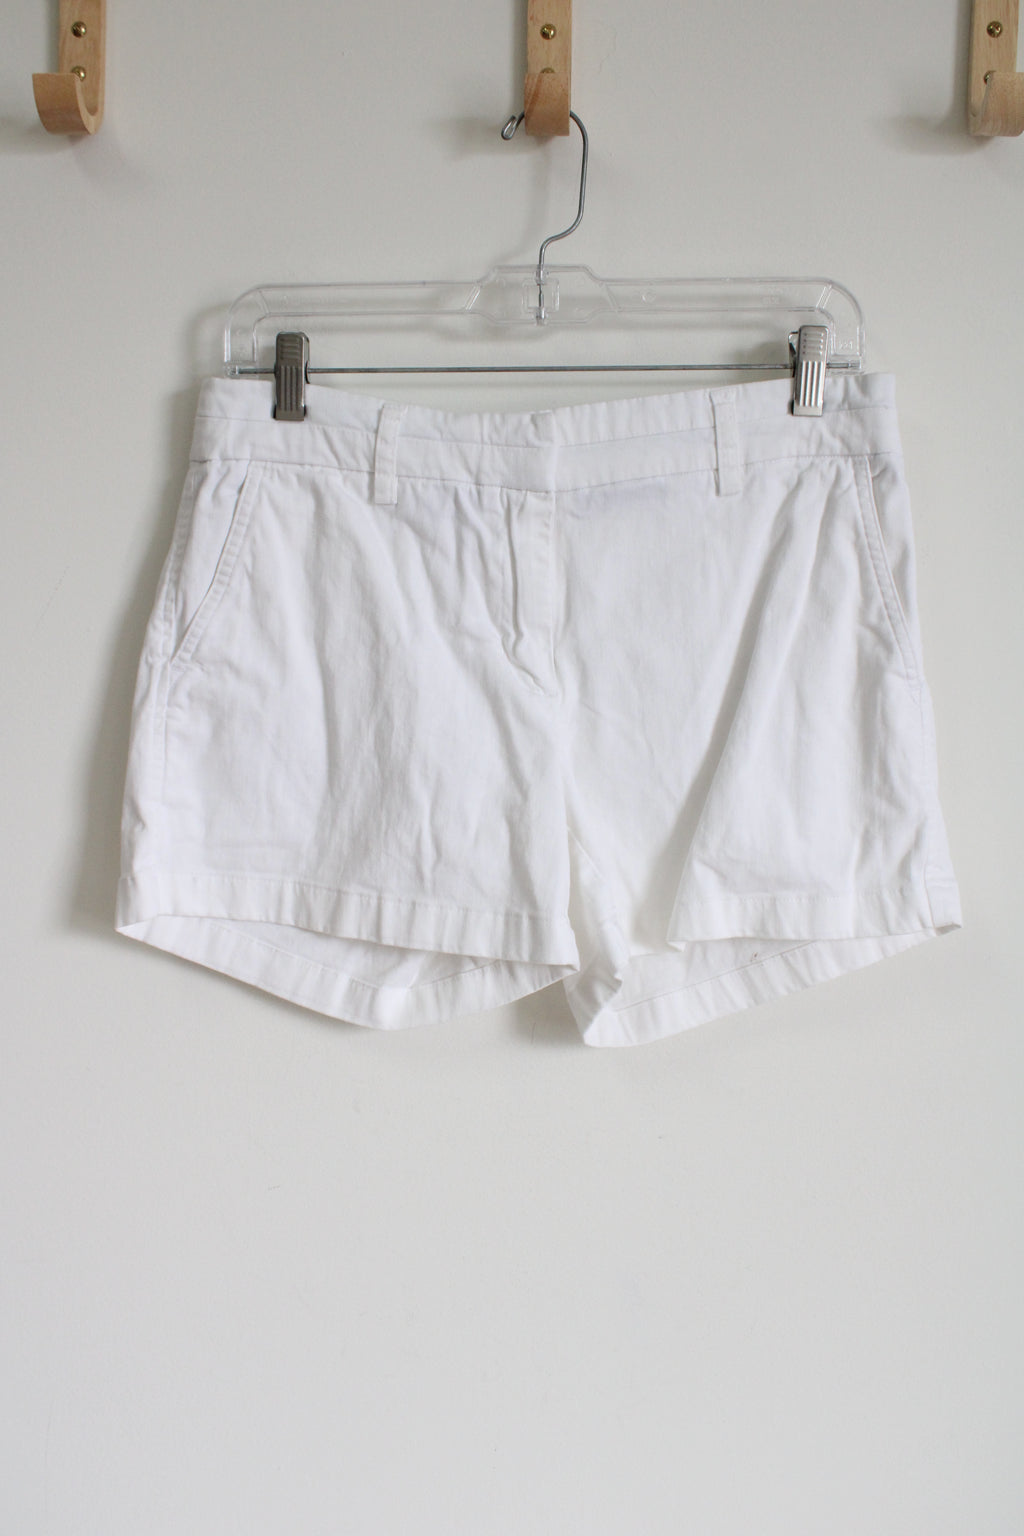 Cambridge Dry Goods White Cotton Shorts | 6